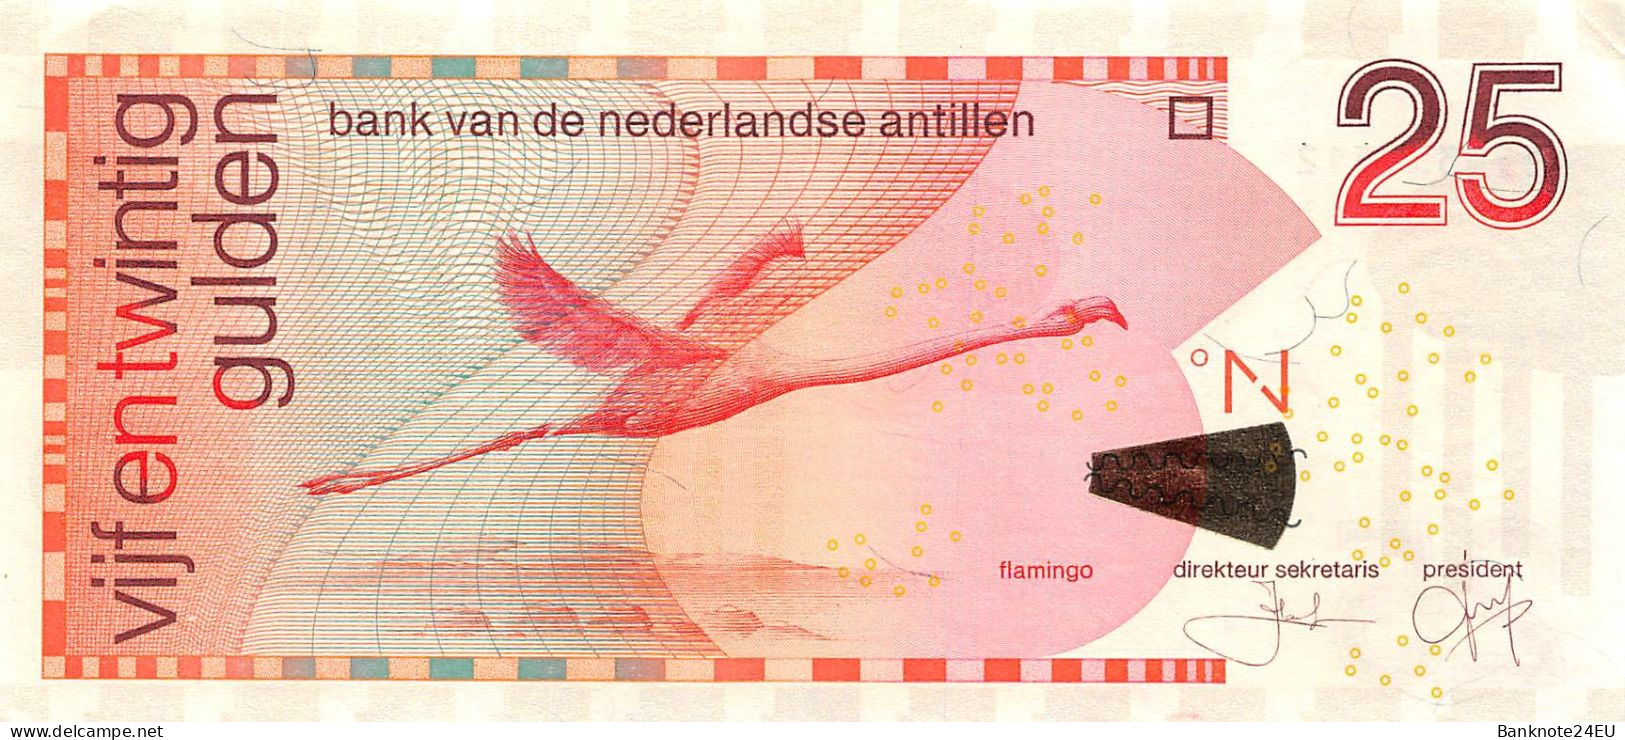 Netherlands Antilles 25 Gulden 2011 Xf Pn 29f Serienumber 4150351512 - Antillas Neerlandesas (...-1986)